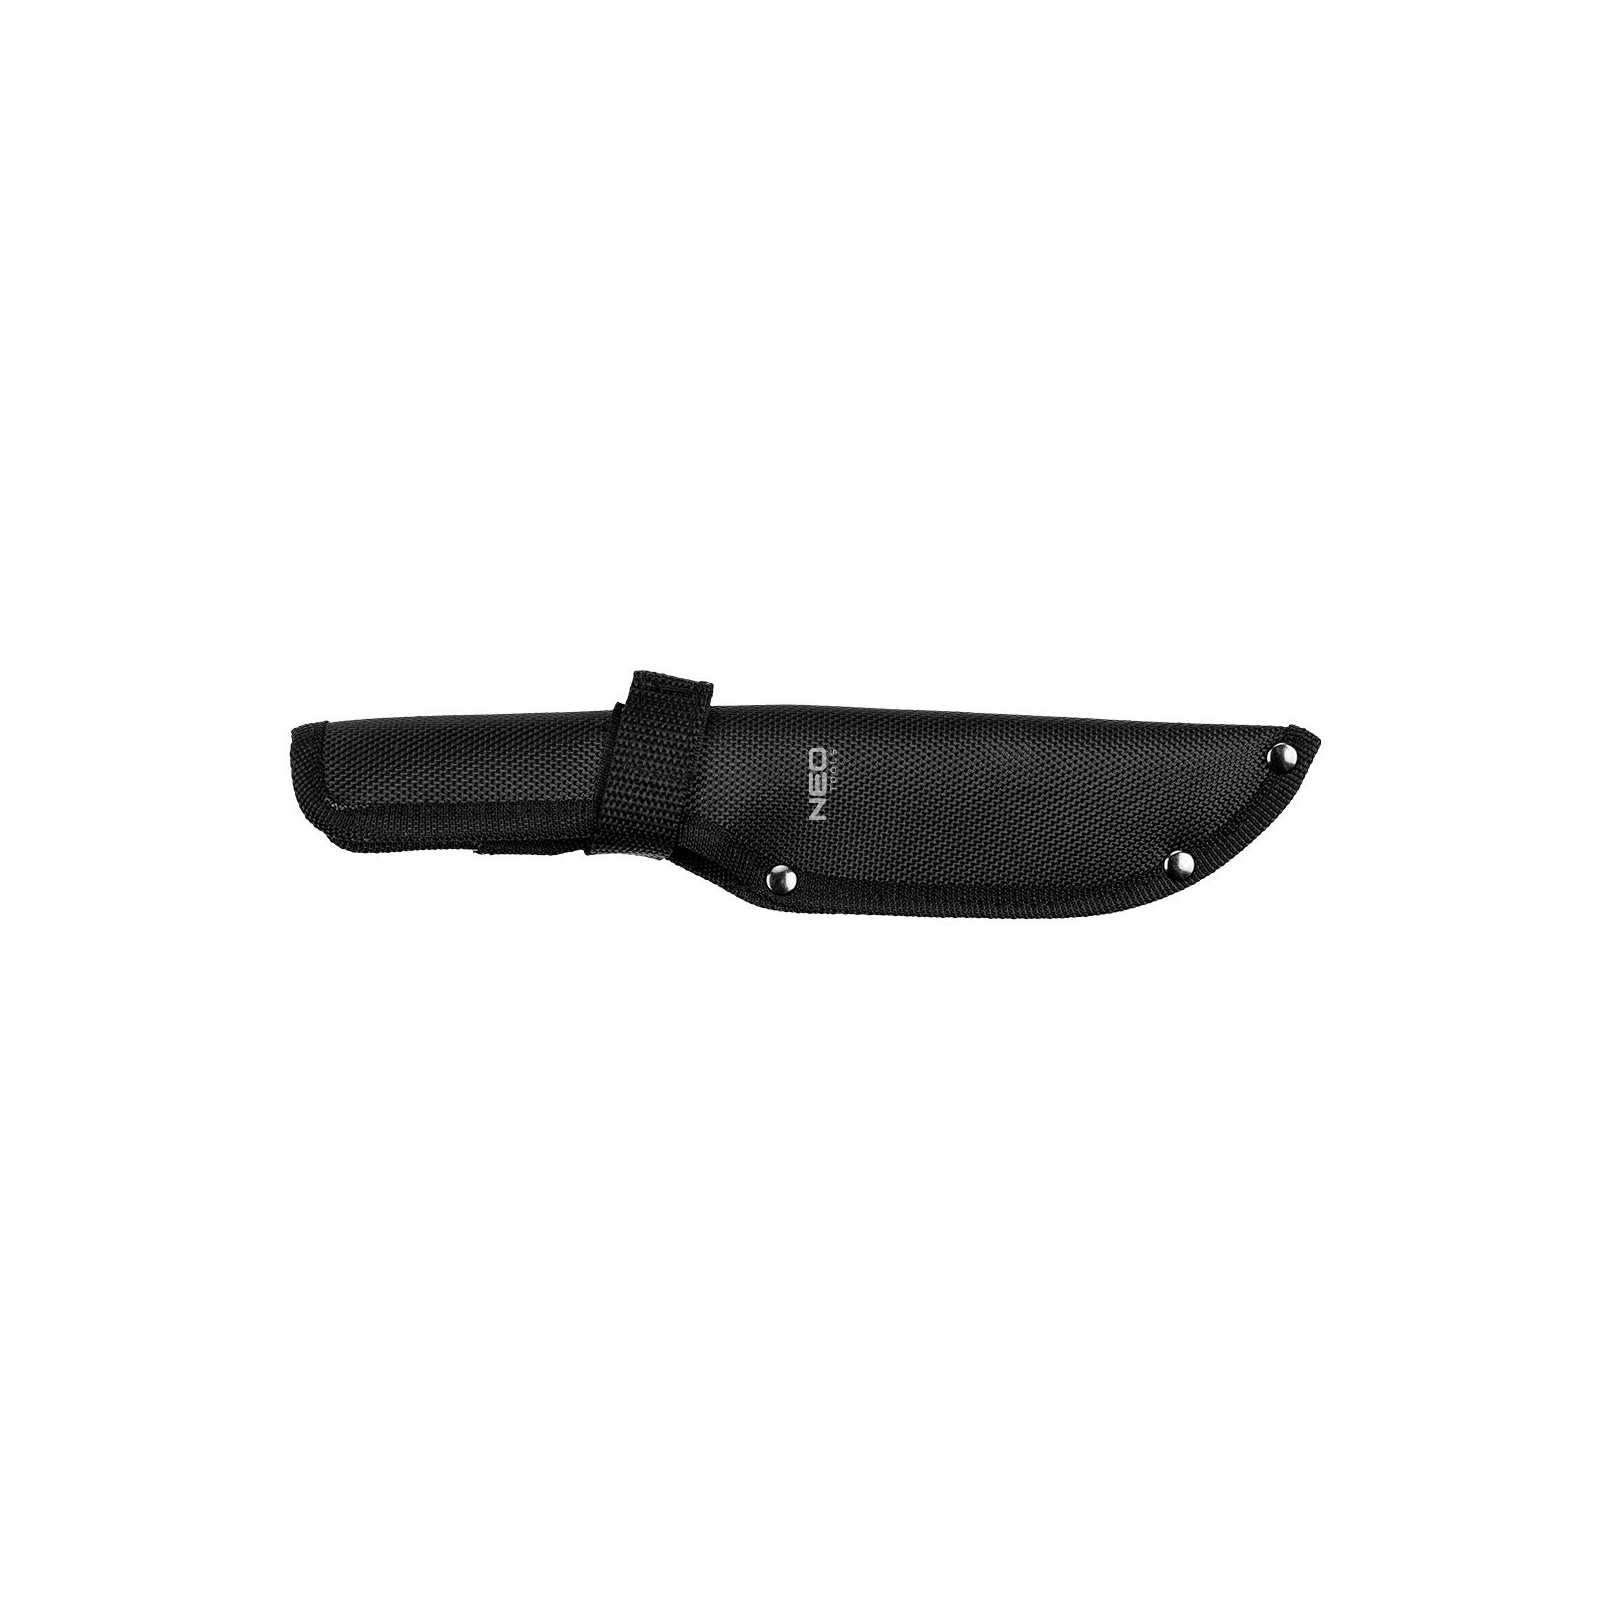 Нож Neo Tools 240/130 мм 3Cr13 (63-116) изображение 4